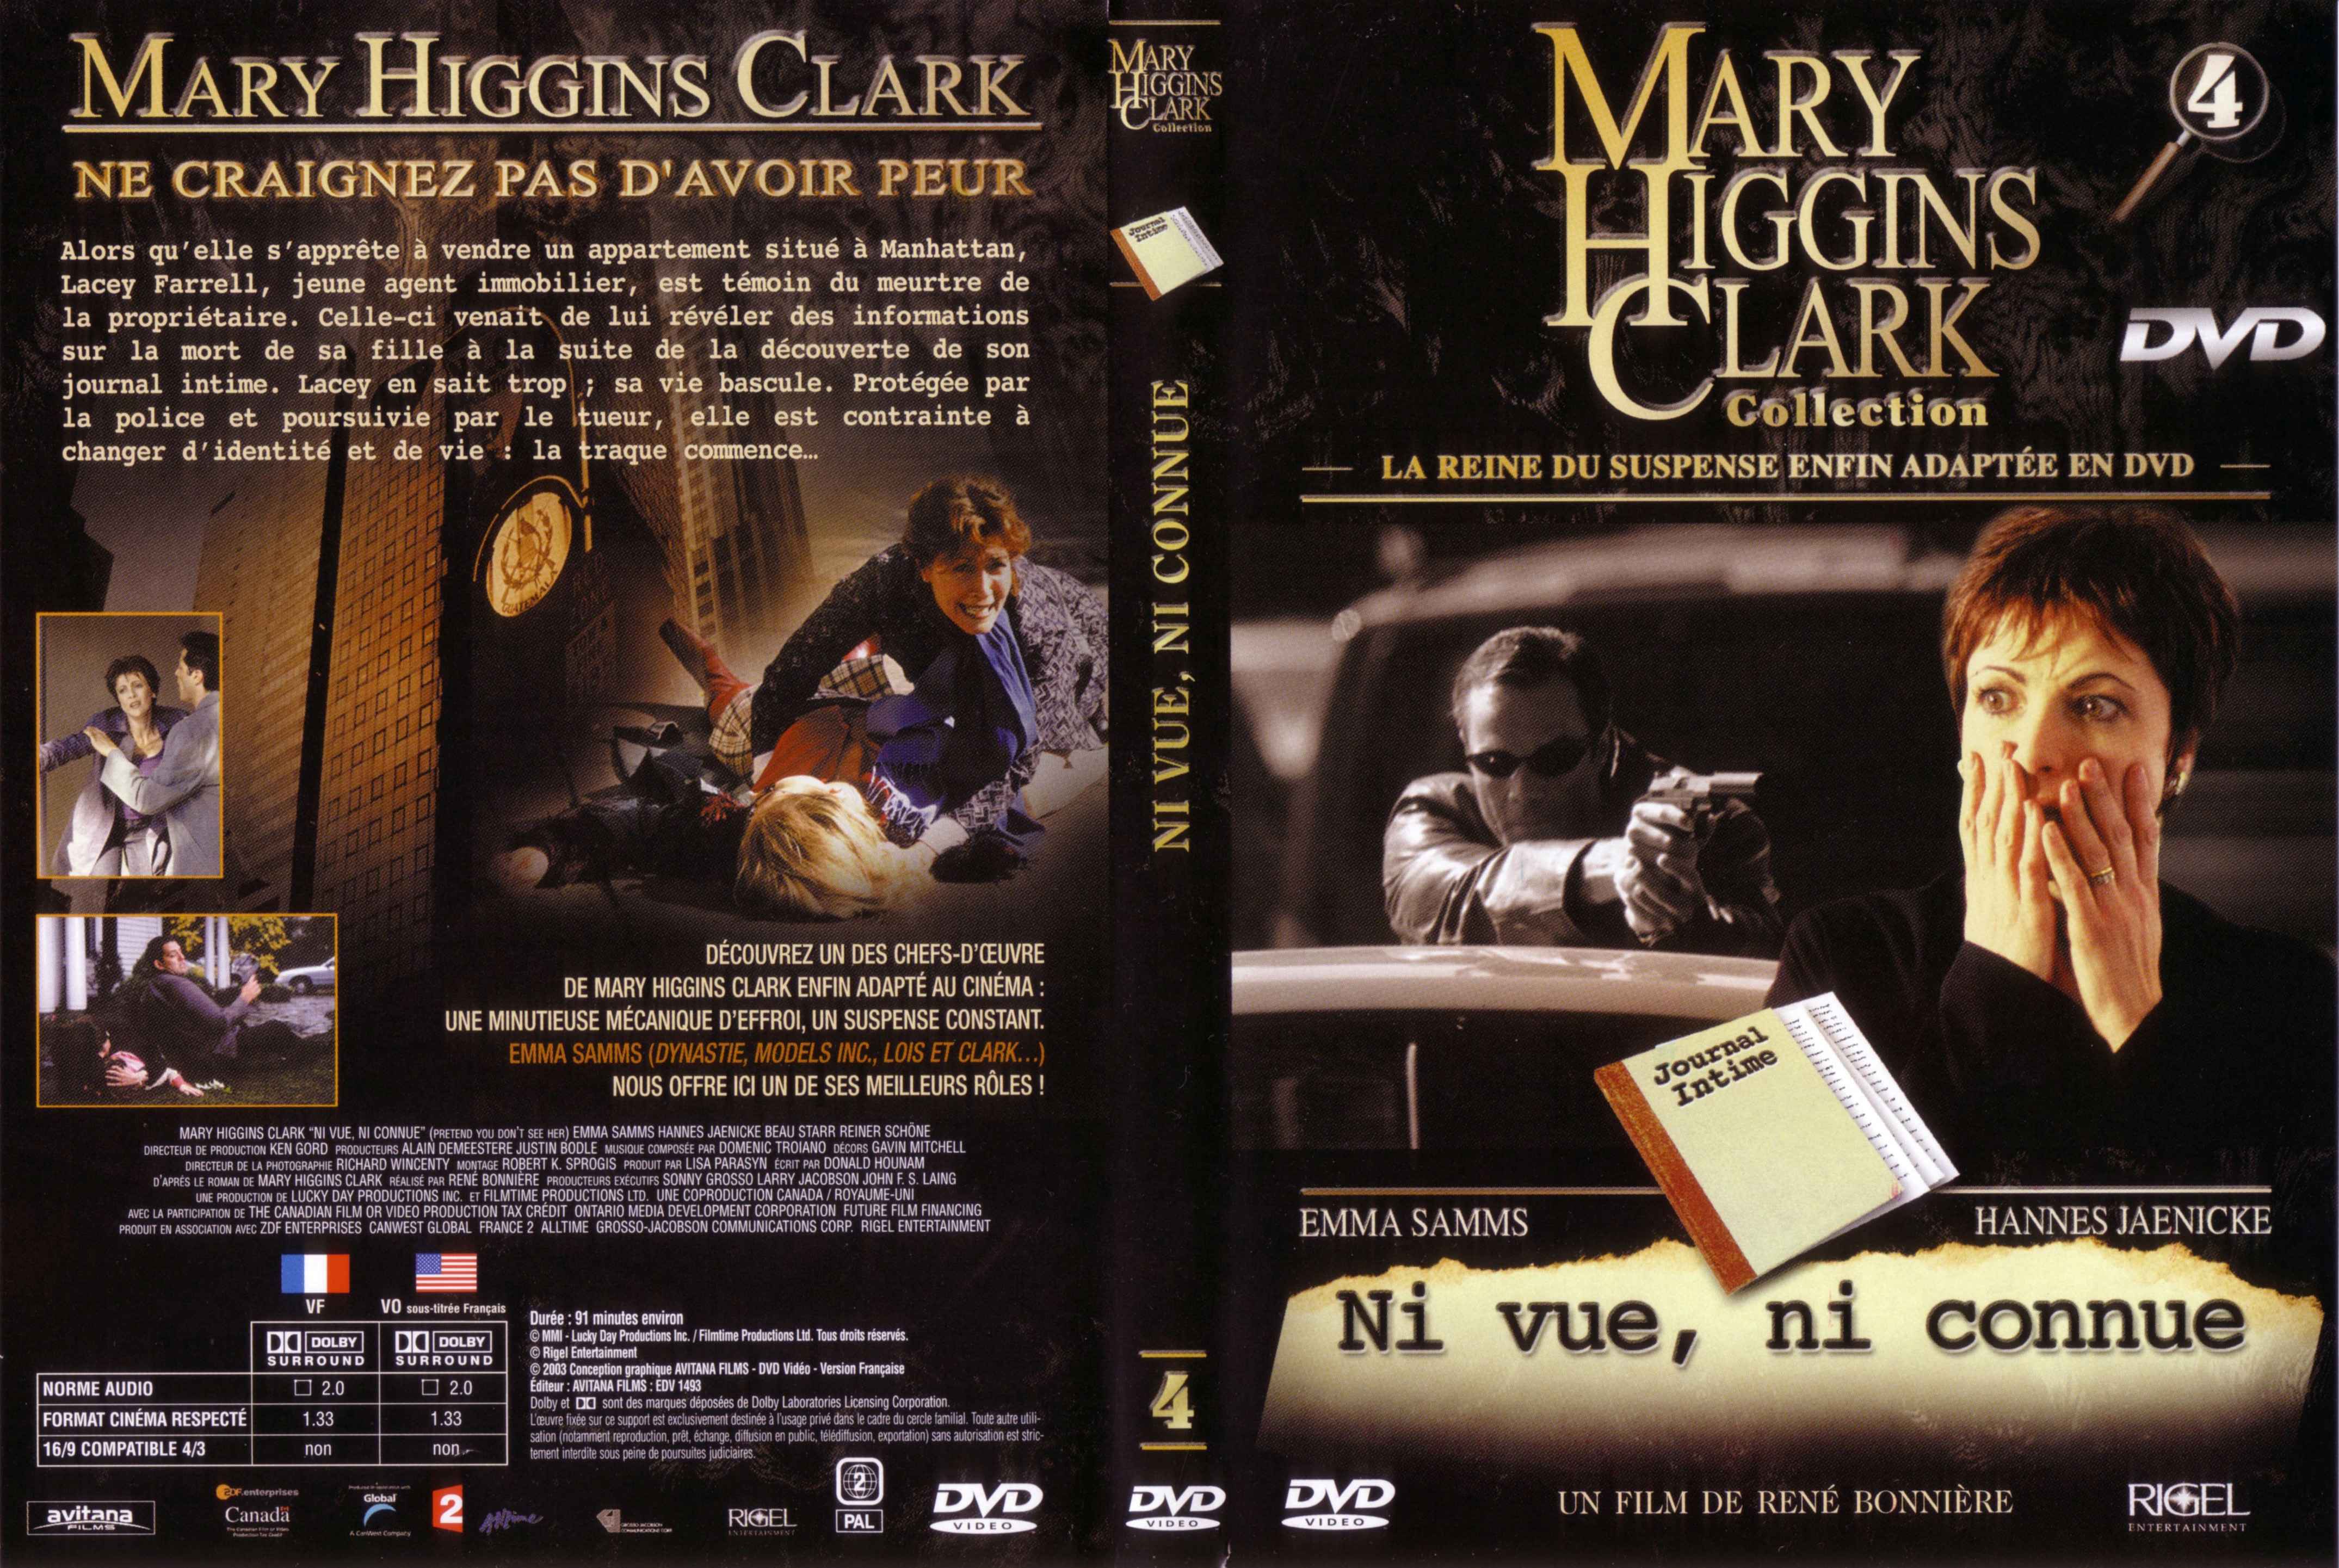 Jaquette DVD de Mary Higgins Clark vol 04 - Ni vue ni connue - Cinéma Passion4299 x 2882